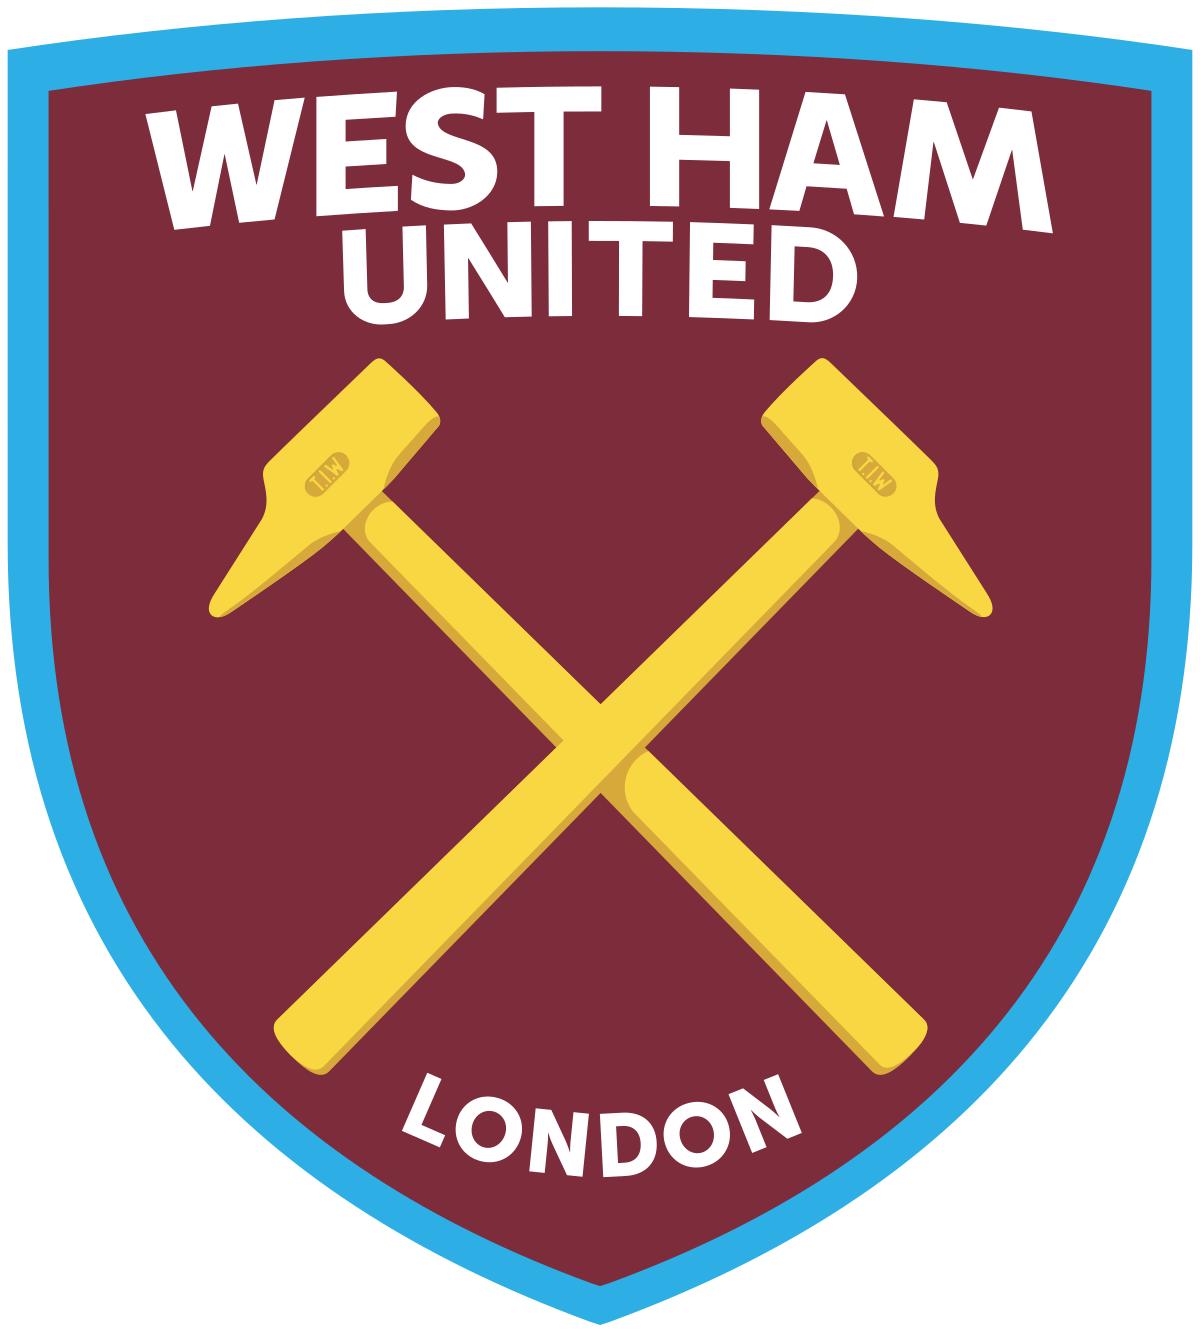 West Ham United F.C. - Wikipedia bahasa Indonesia, ensiklopedia bebas